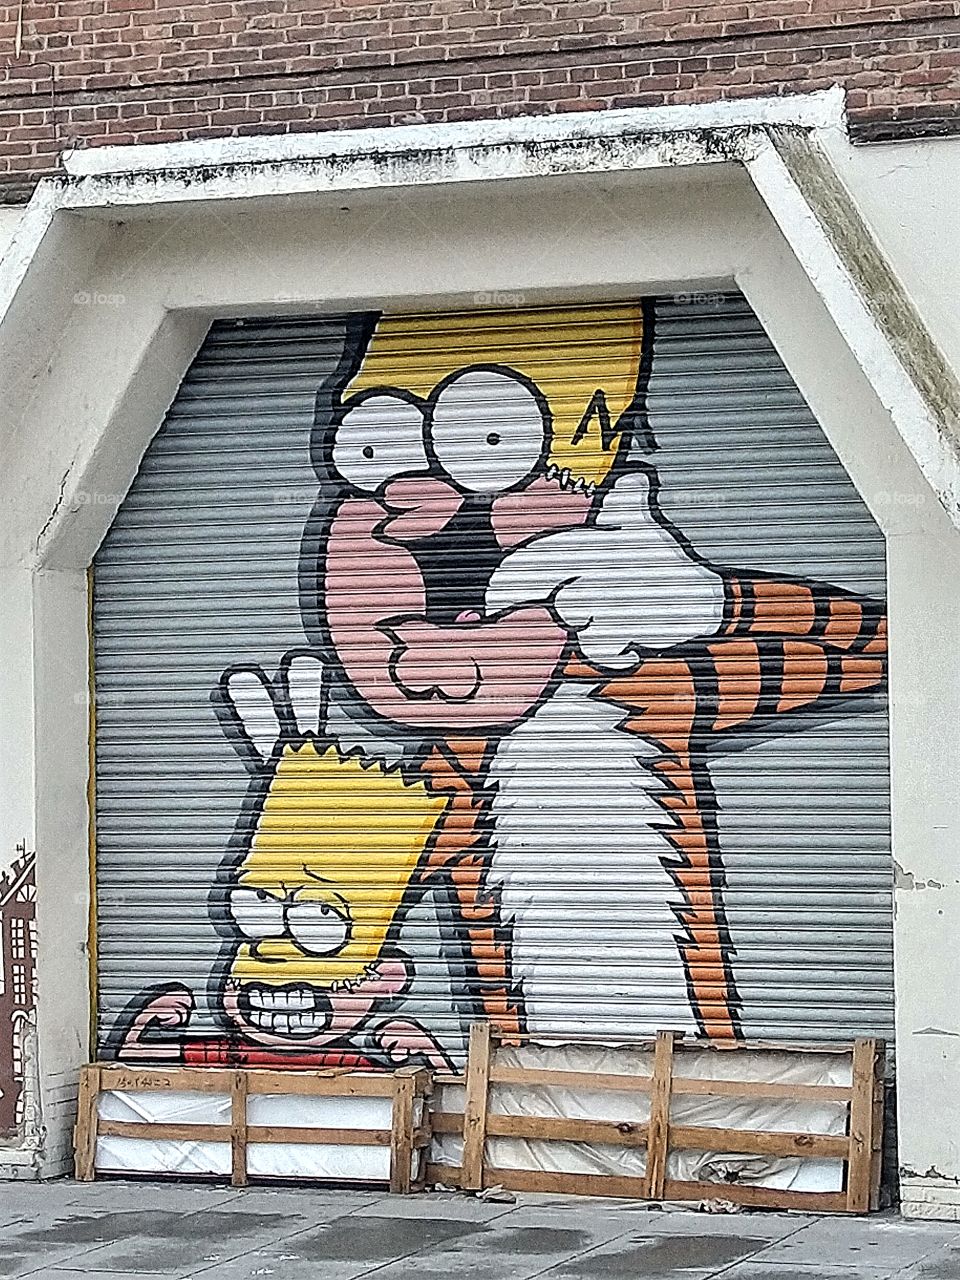 hey Lois I'm graffiti of a tiger and Homer